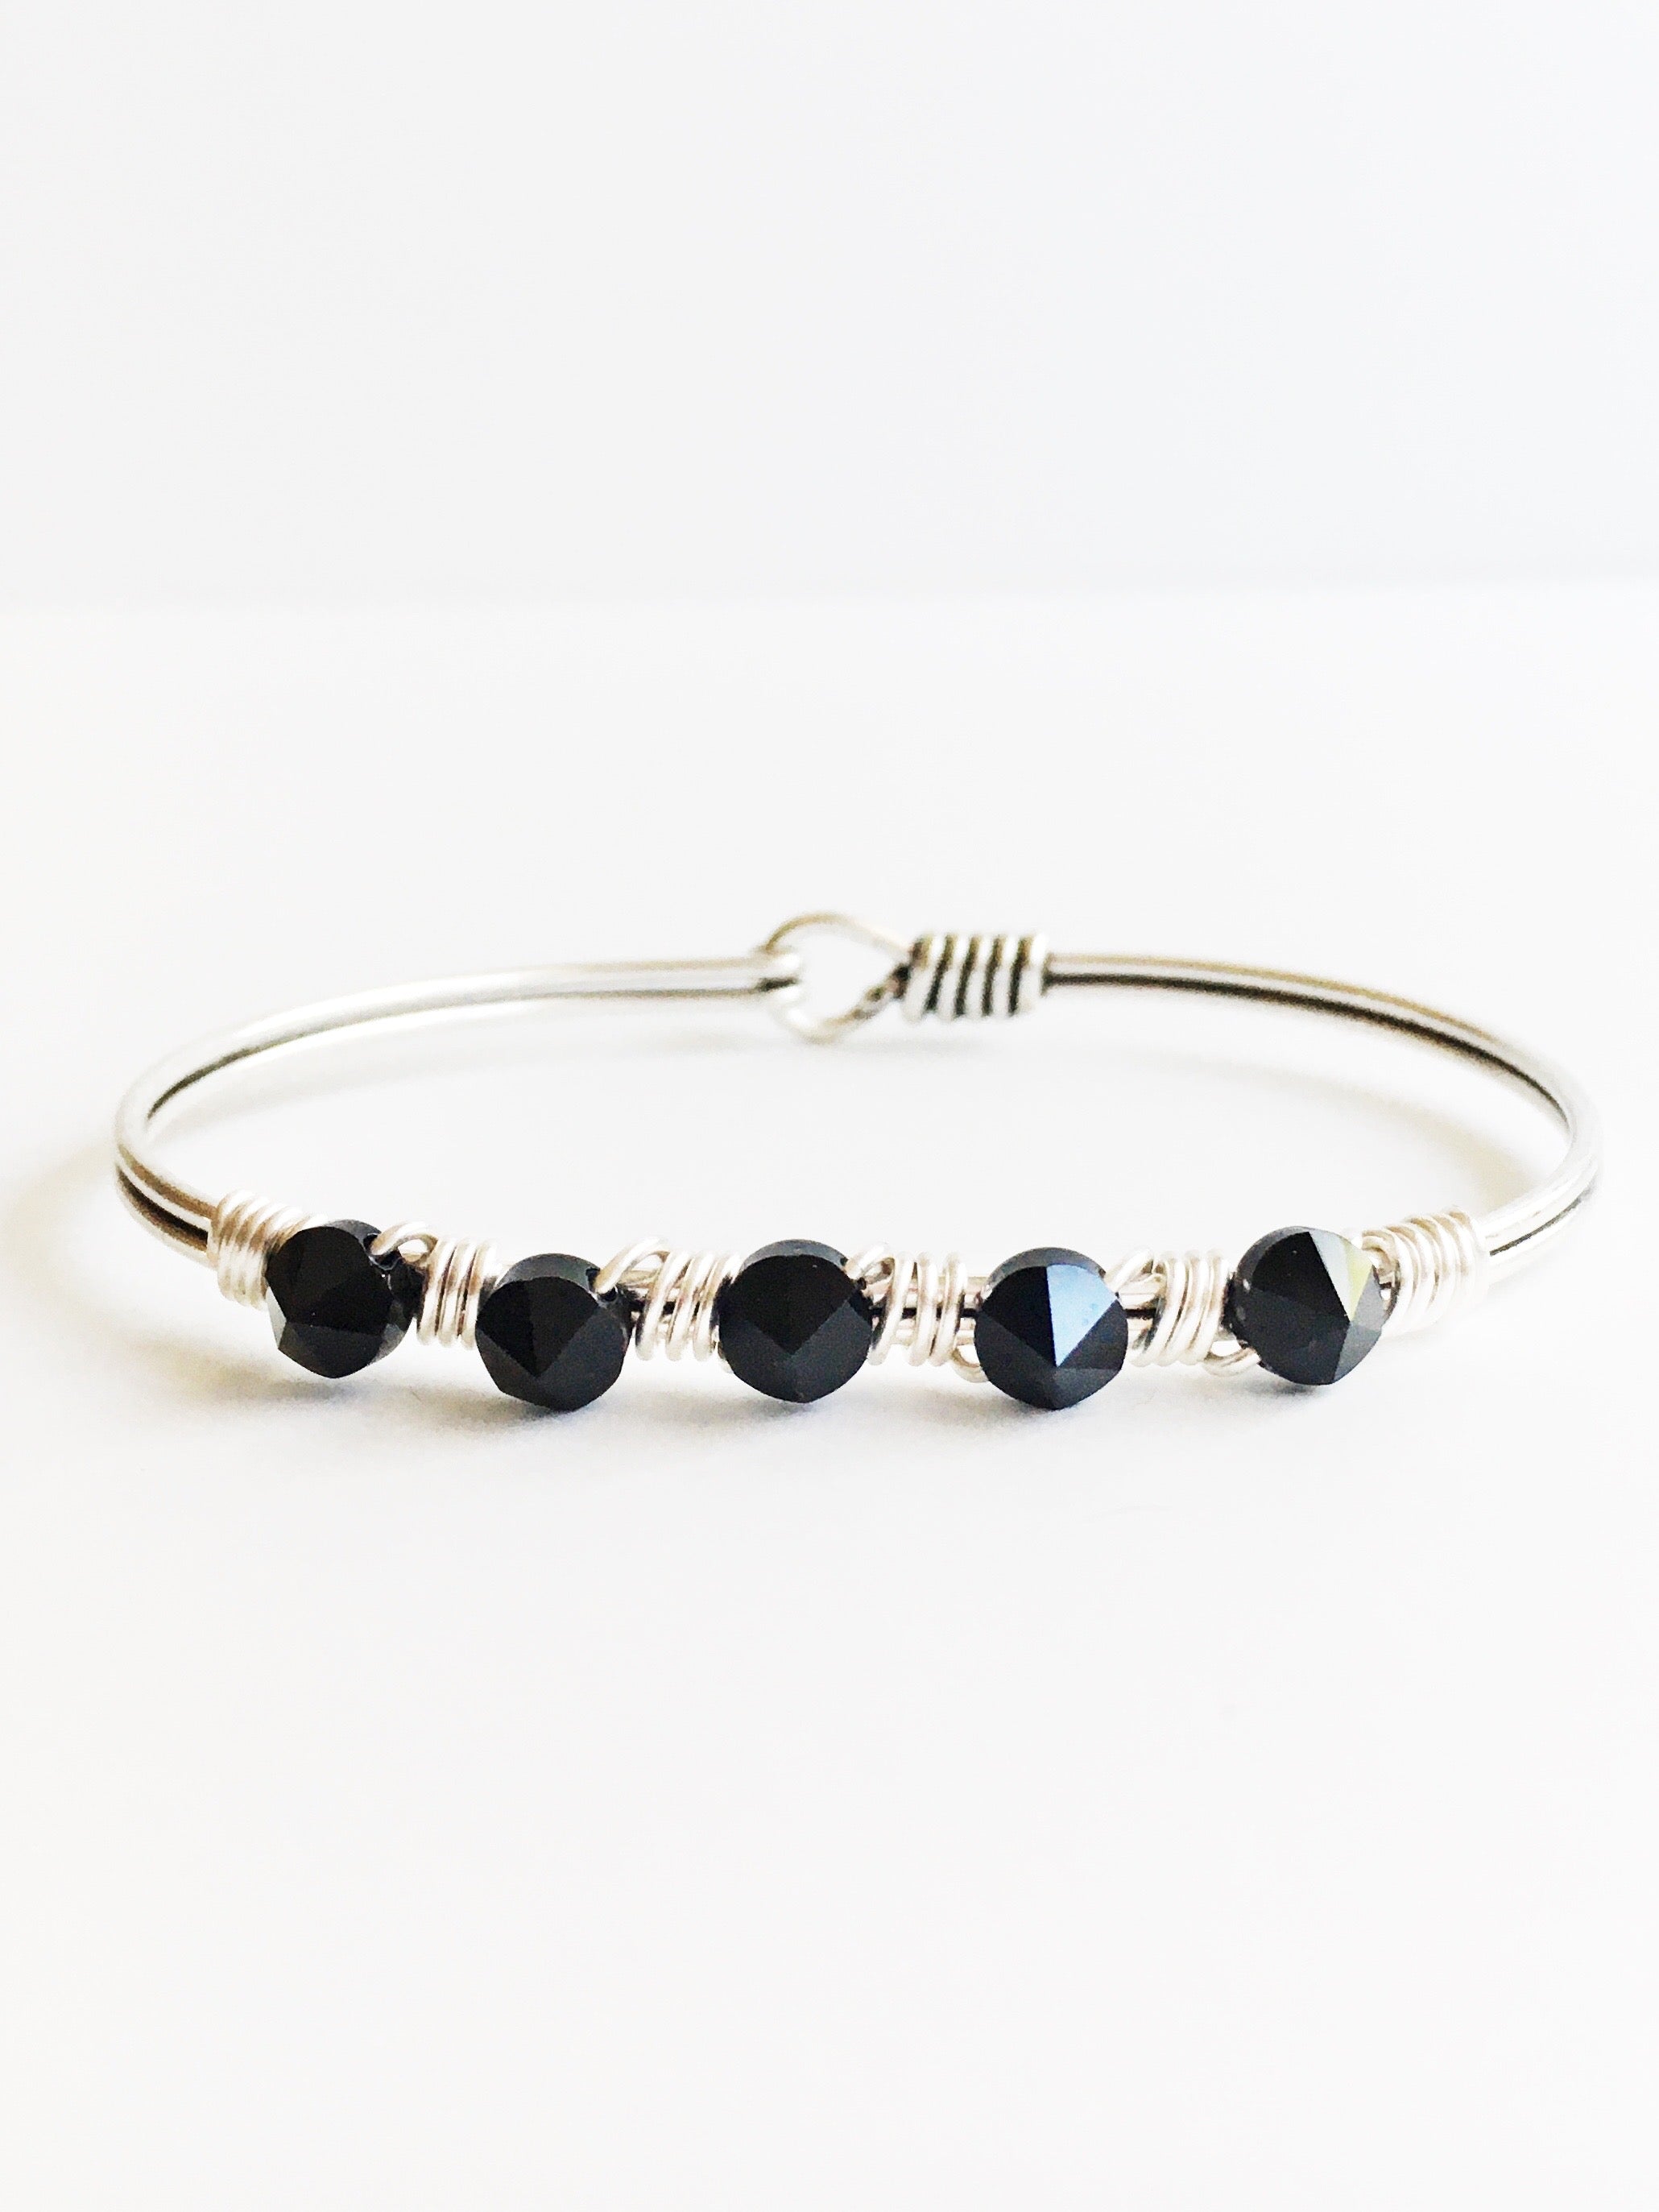 Hand wired black crystal statement bracelet